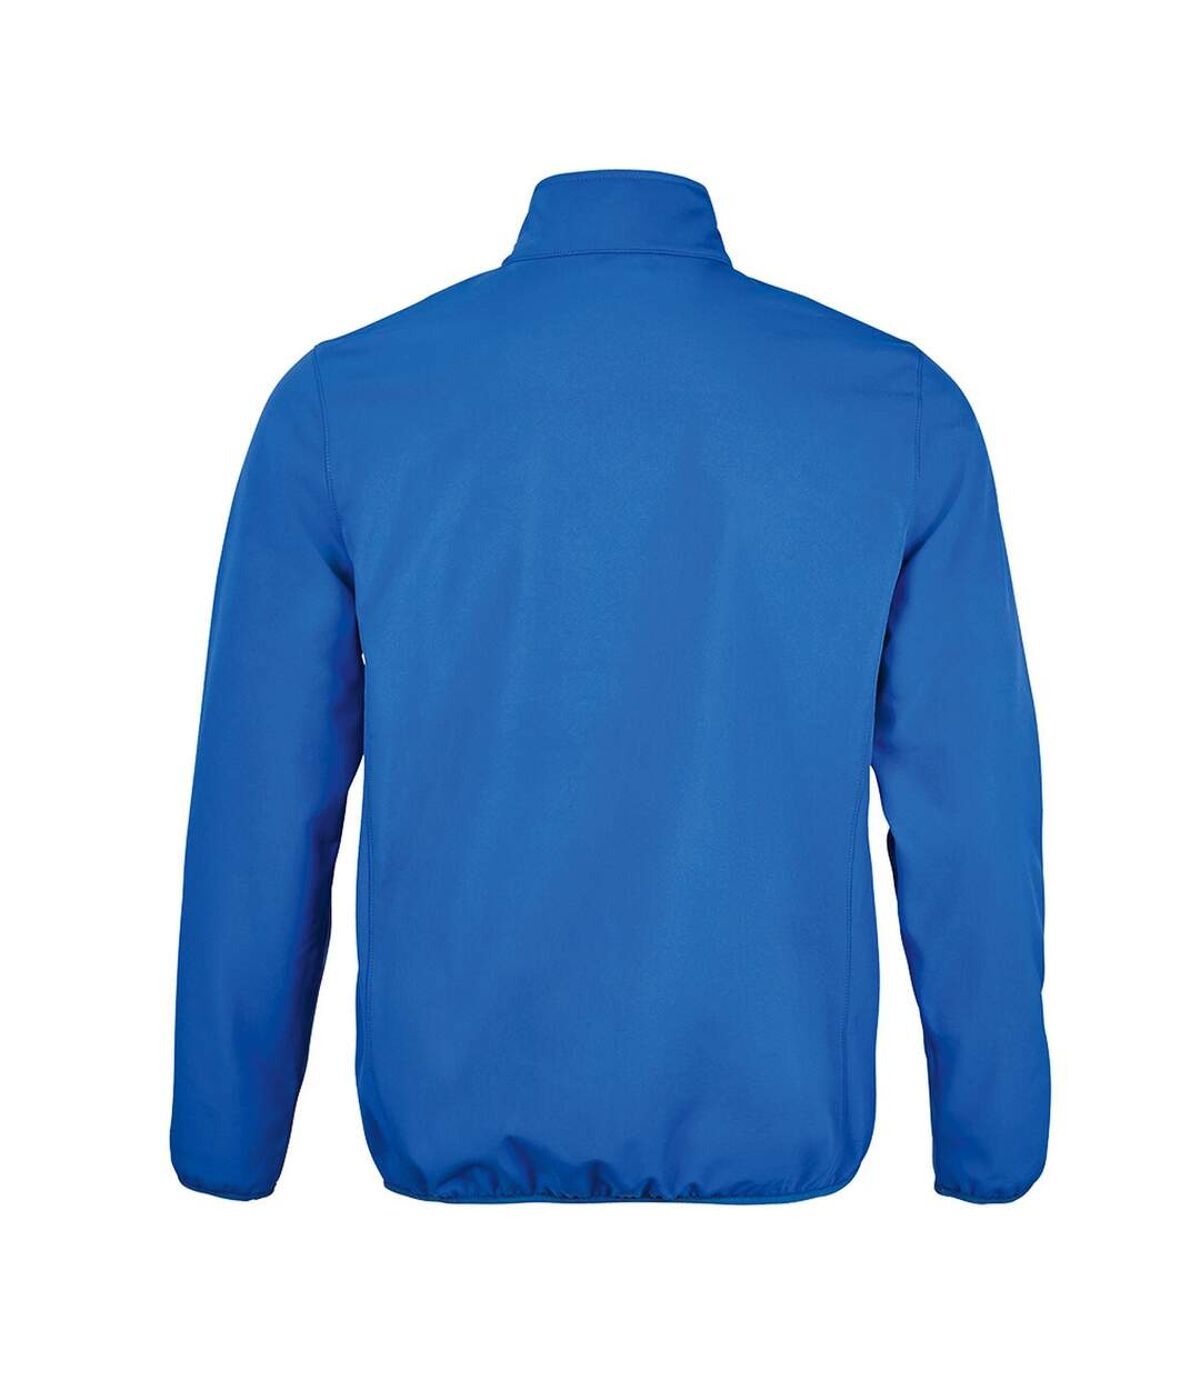 SOLS Mens Radian Soft Shell Jacket (Royal Blue)